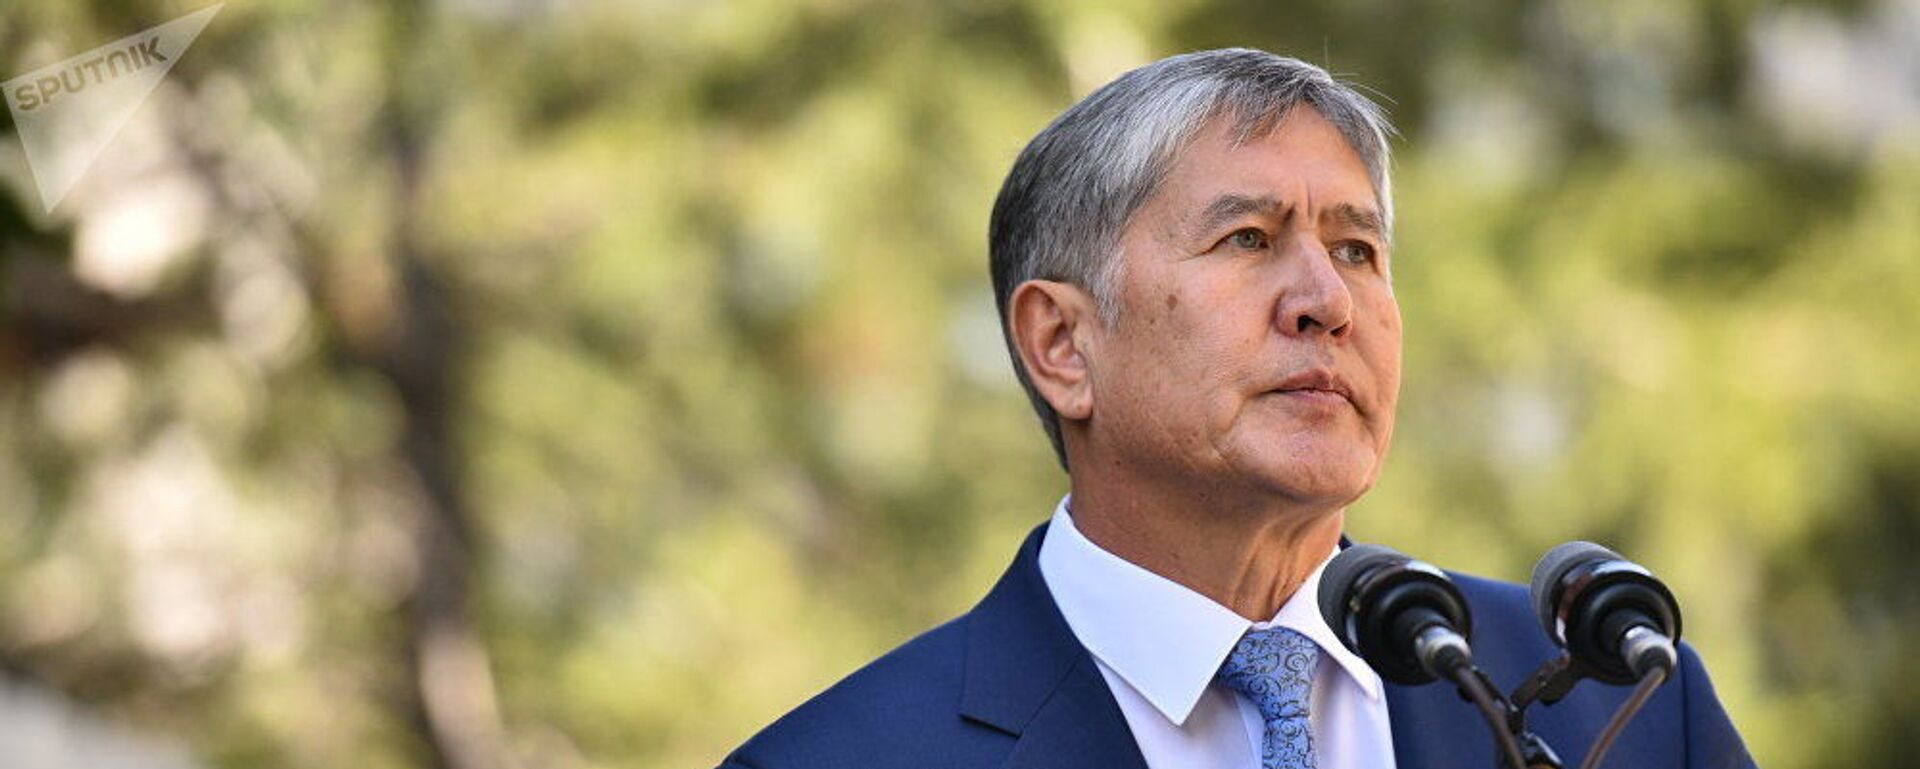 Бывший президент Кыргызстана Алмазбек Атамбаев, архивное фото - Sputnik Казахстан, 1920, 26.08.2022